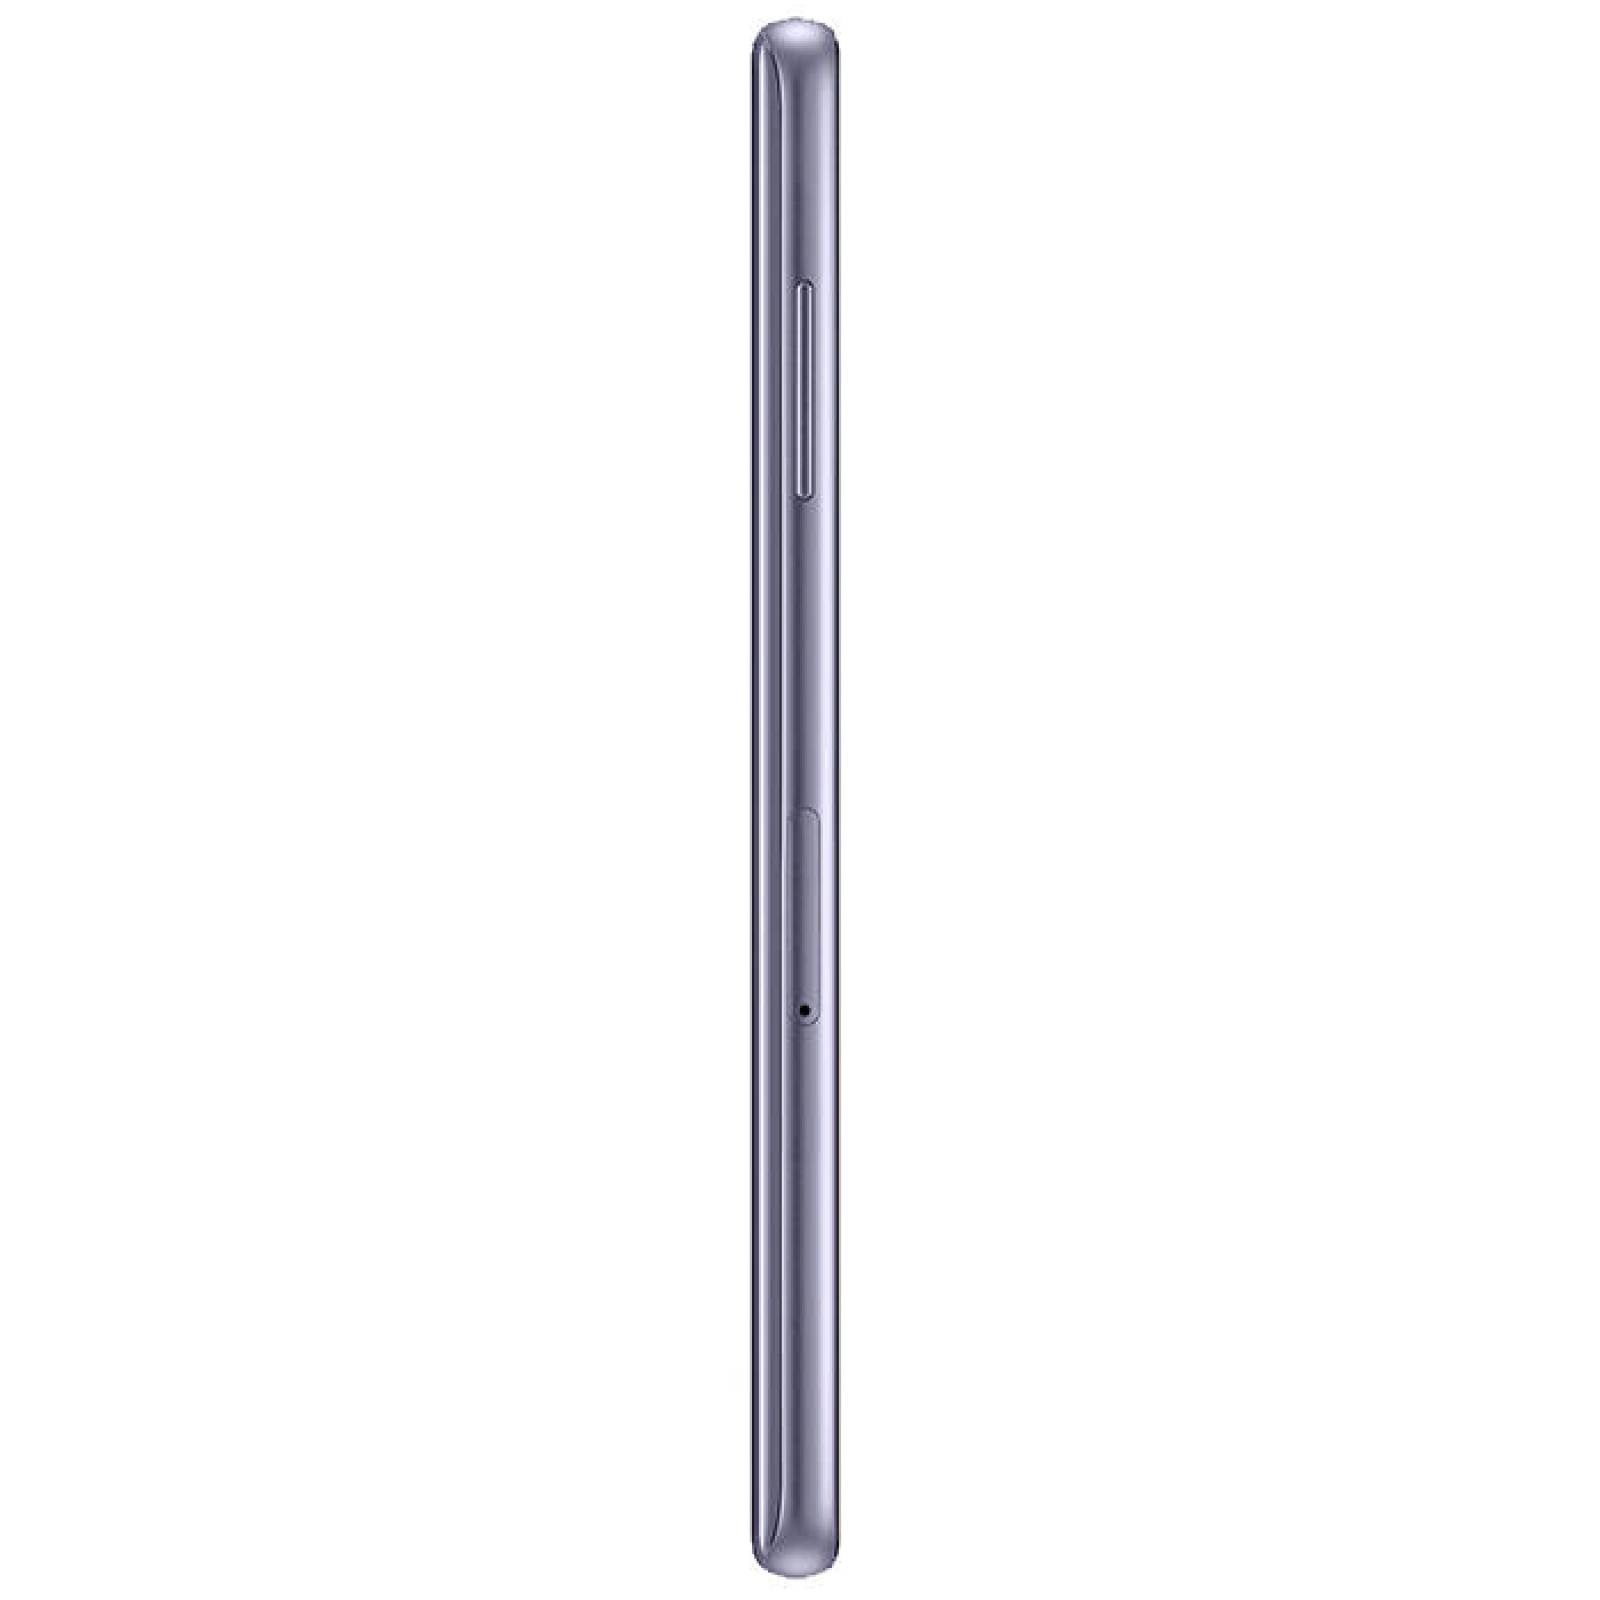 Celular SAMSUNG LTE A8+ Color Violeta Telcel